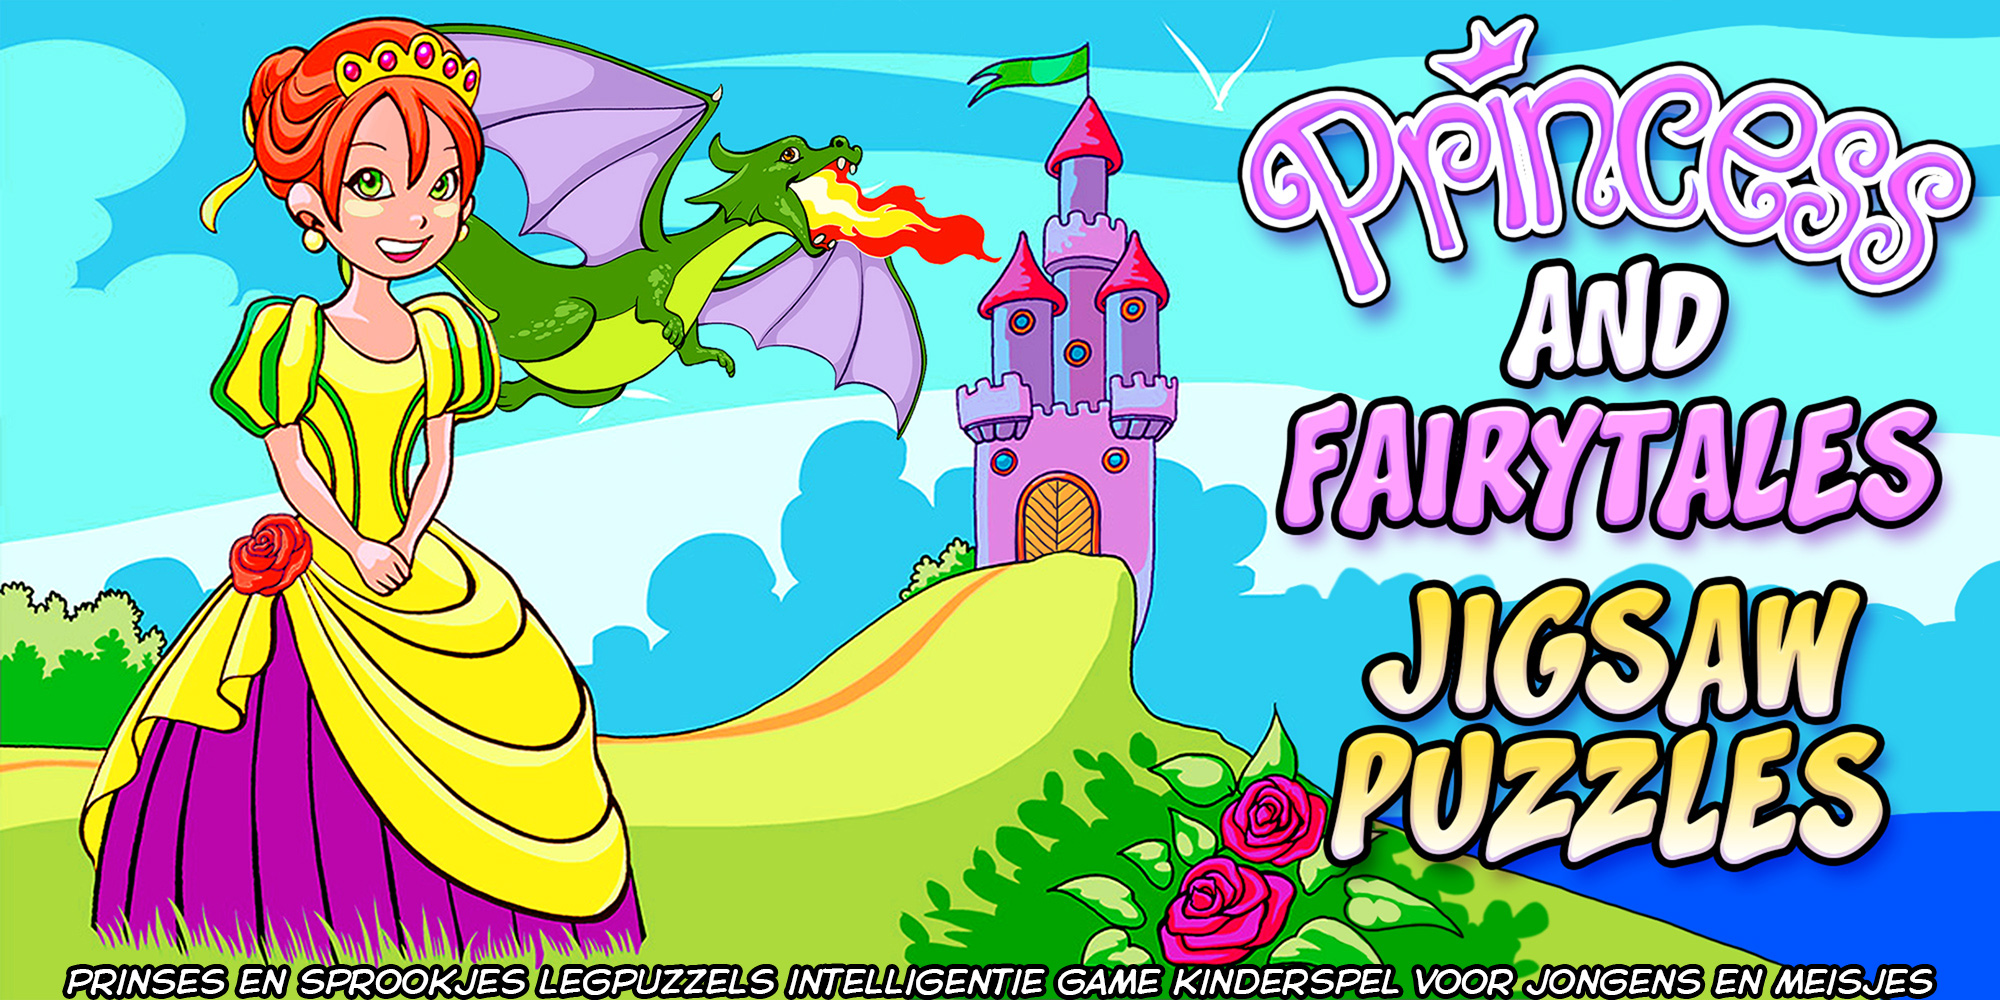 verwarring Genre Aanwezigheid Princess and Fairytales Jigsaw Puzzles - prinses en sprookjes legpuzzels  intelligentie game kinderspel voor jongens en meisjes | Nintendo Switch  download software | Games | Nintendo